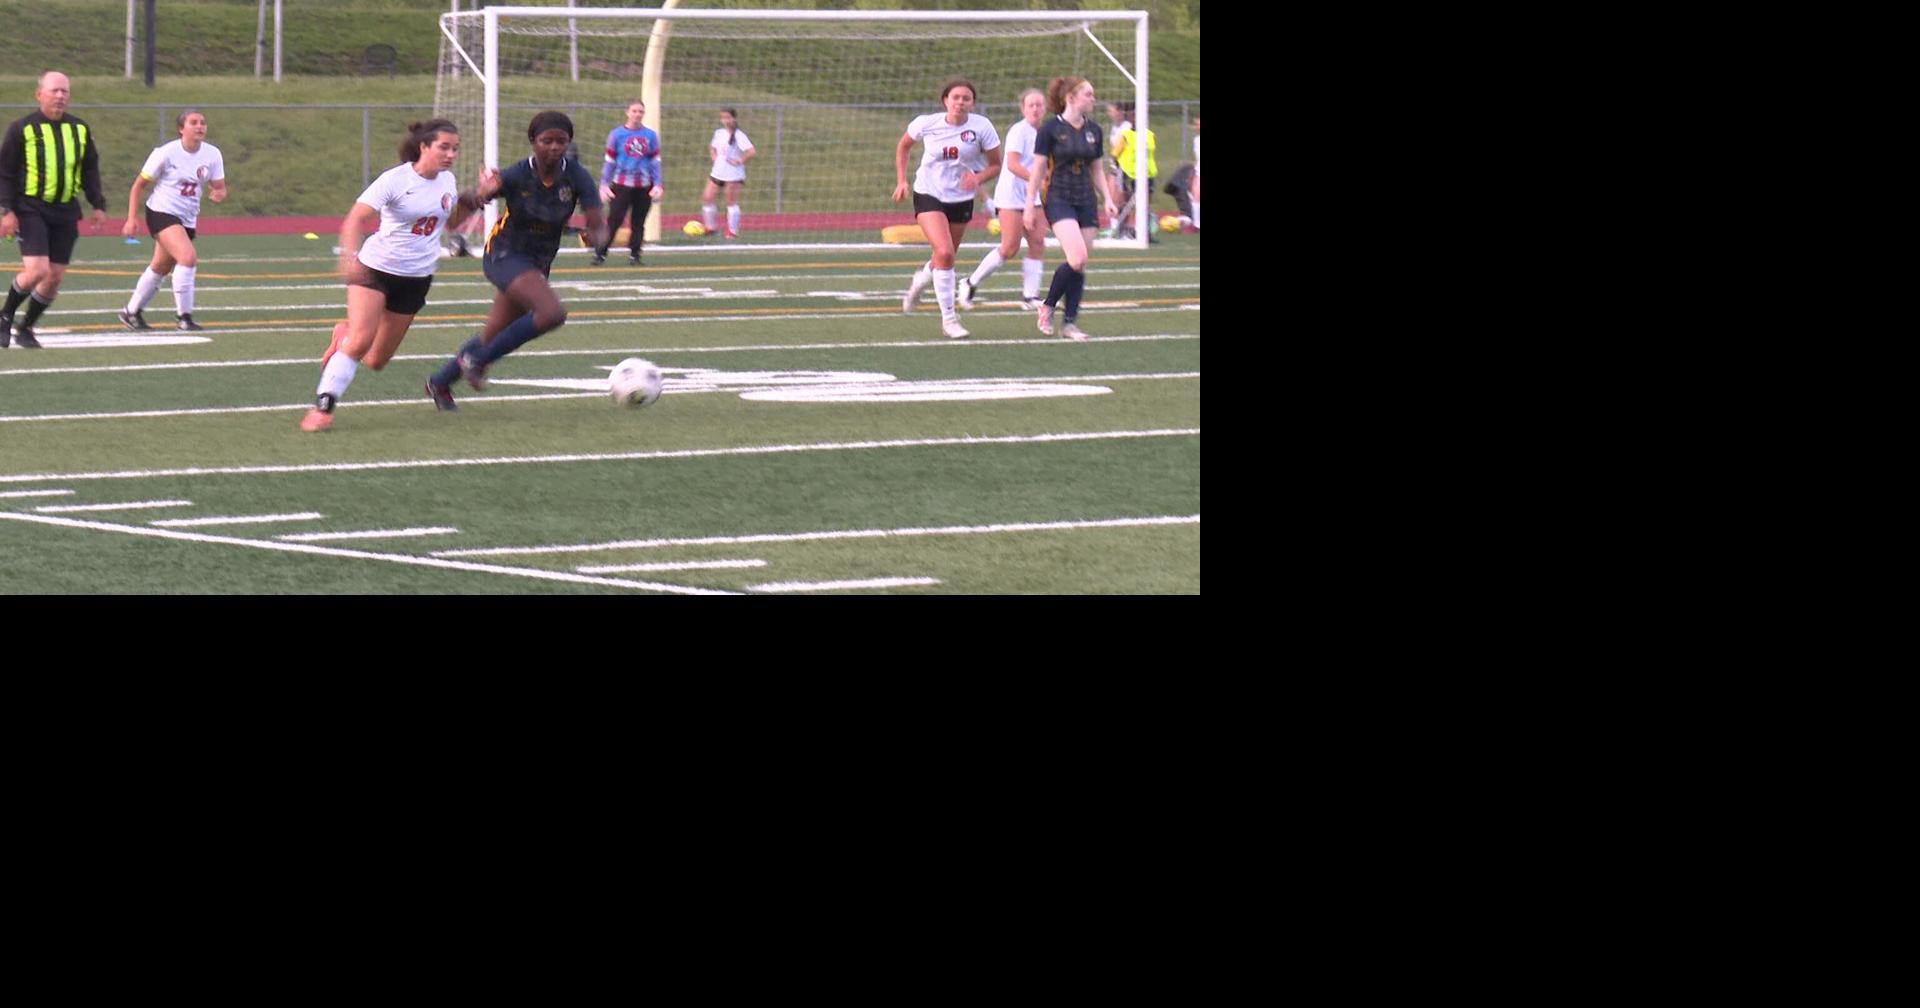 Kirksville High School Girls’ Soccer team secures victory over Battle High School